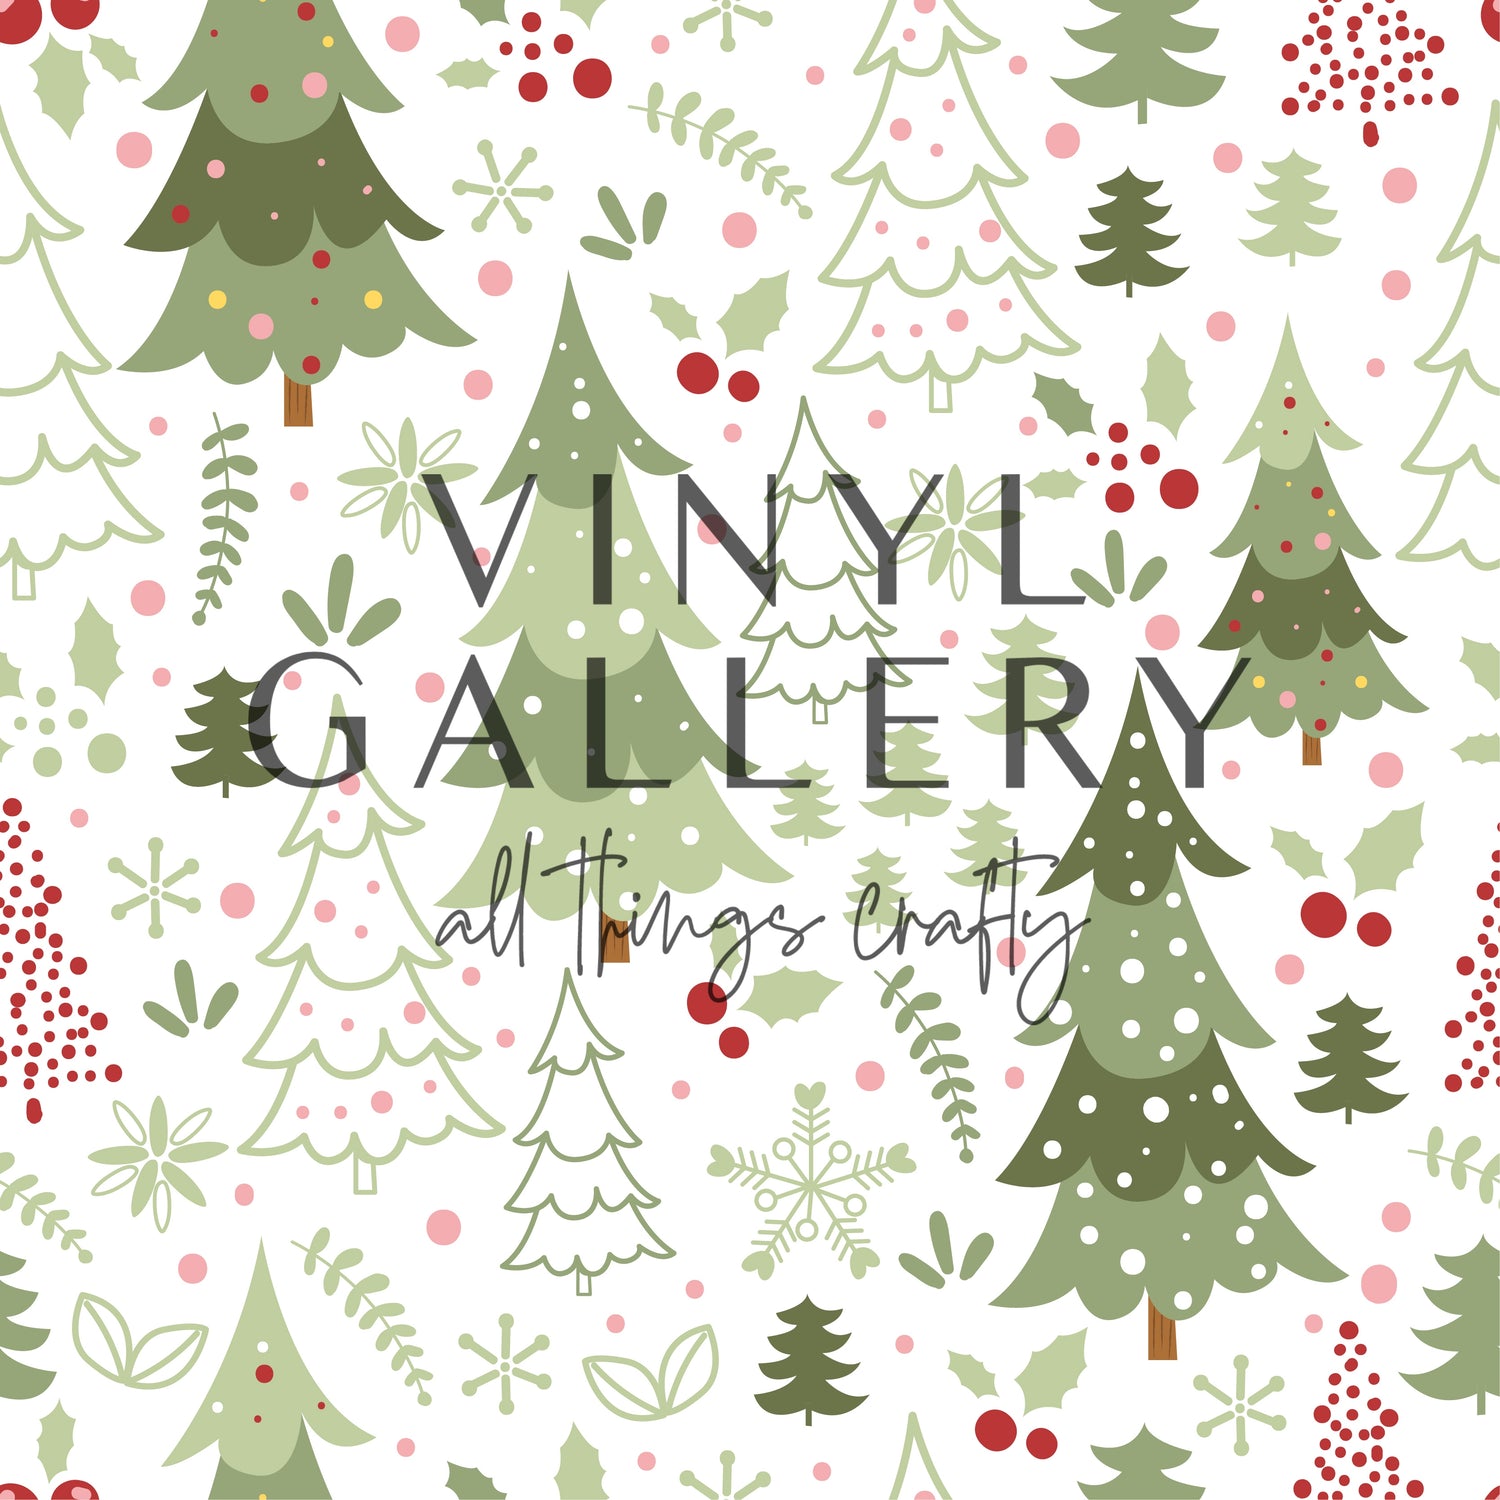 Christmas Vinyl